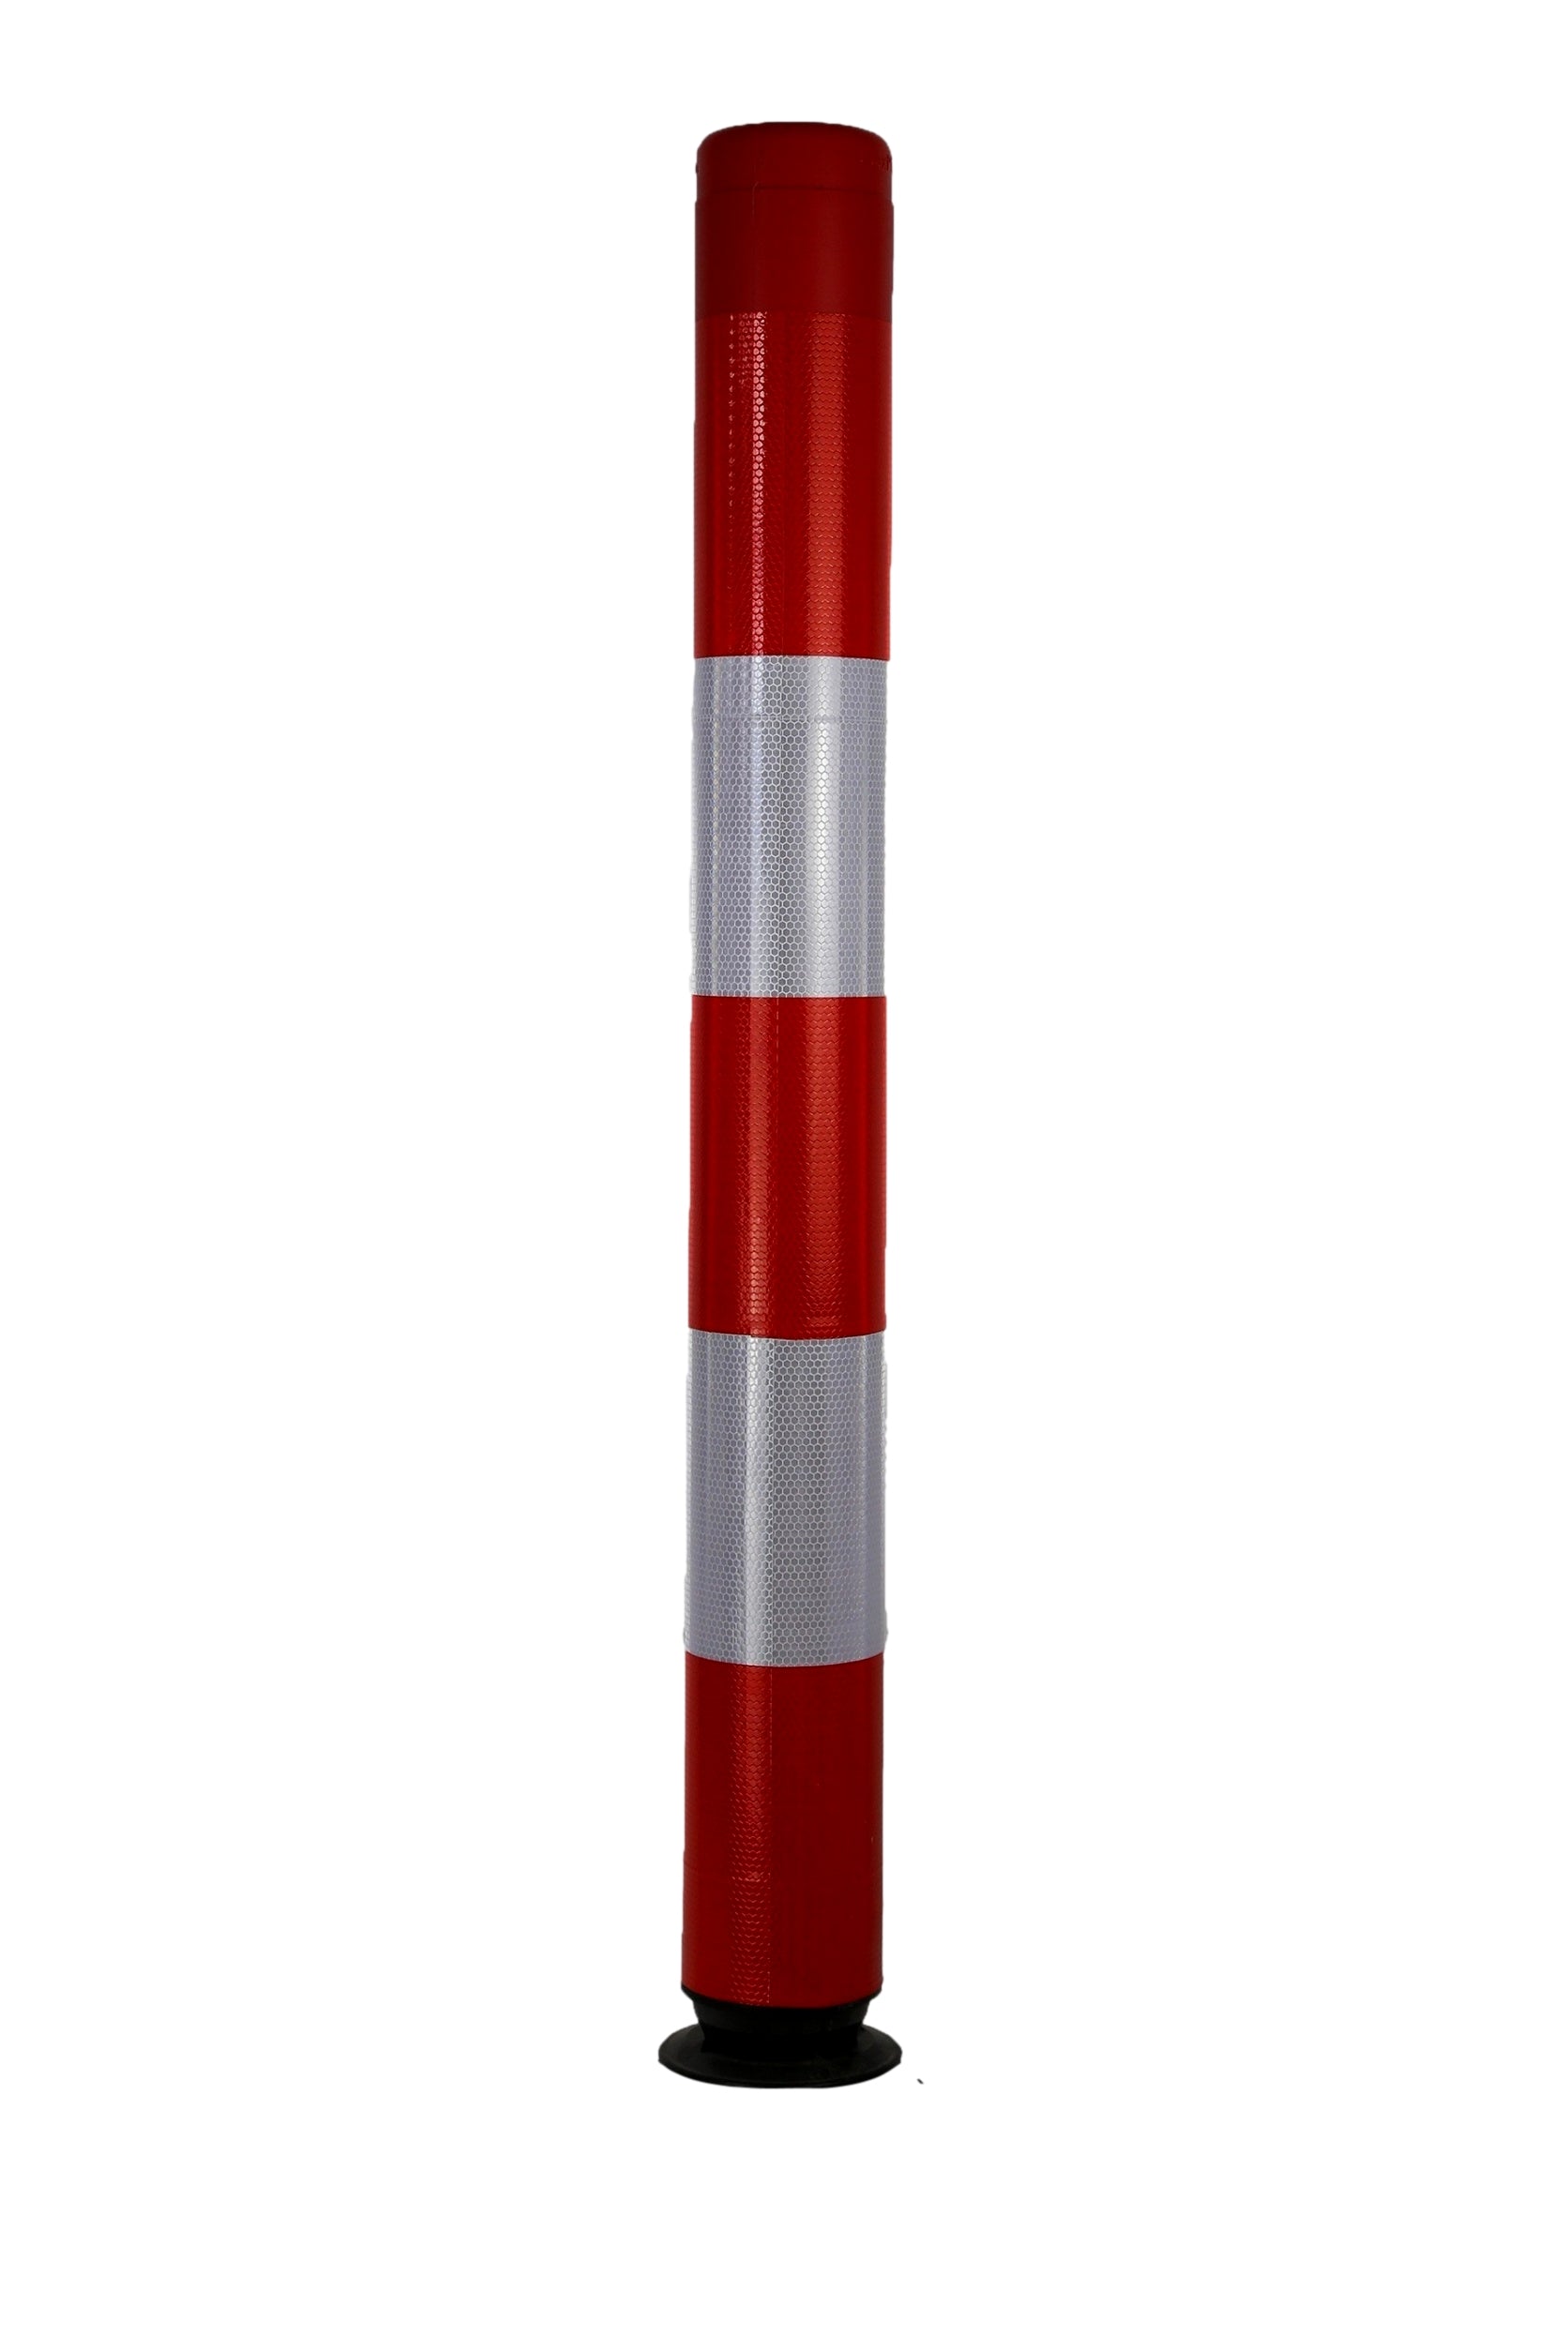 FlexPin Reflective Flexible Post (Red/White) - 1000mm